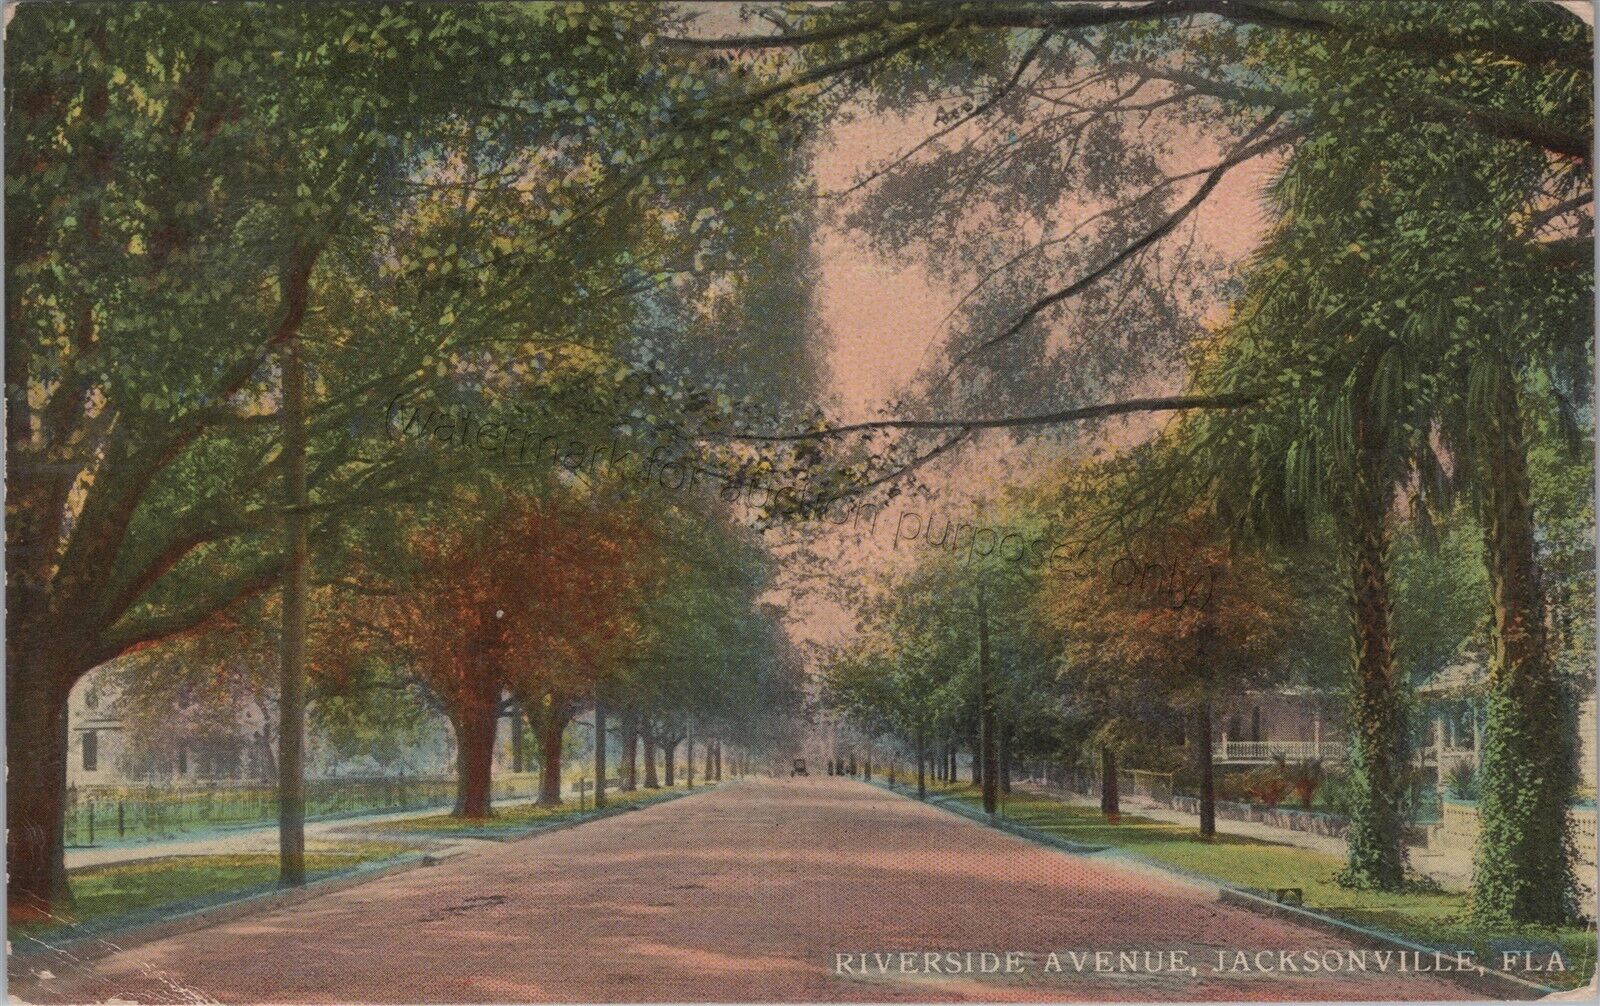 Jacksonville, FL: 1912 Riverside Avenue, Five Points - Vintage Florida Postcard